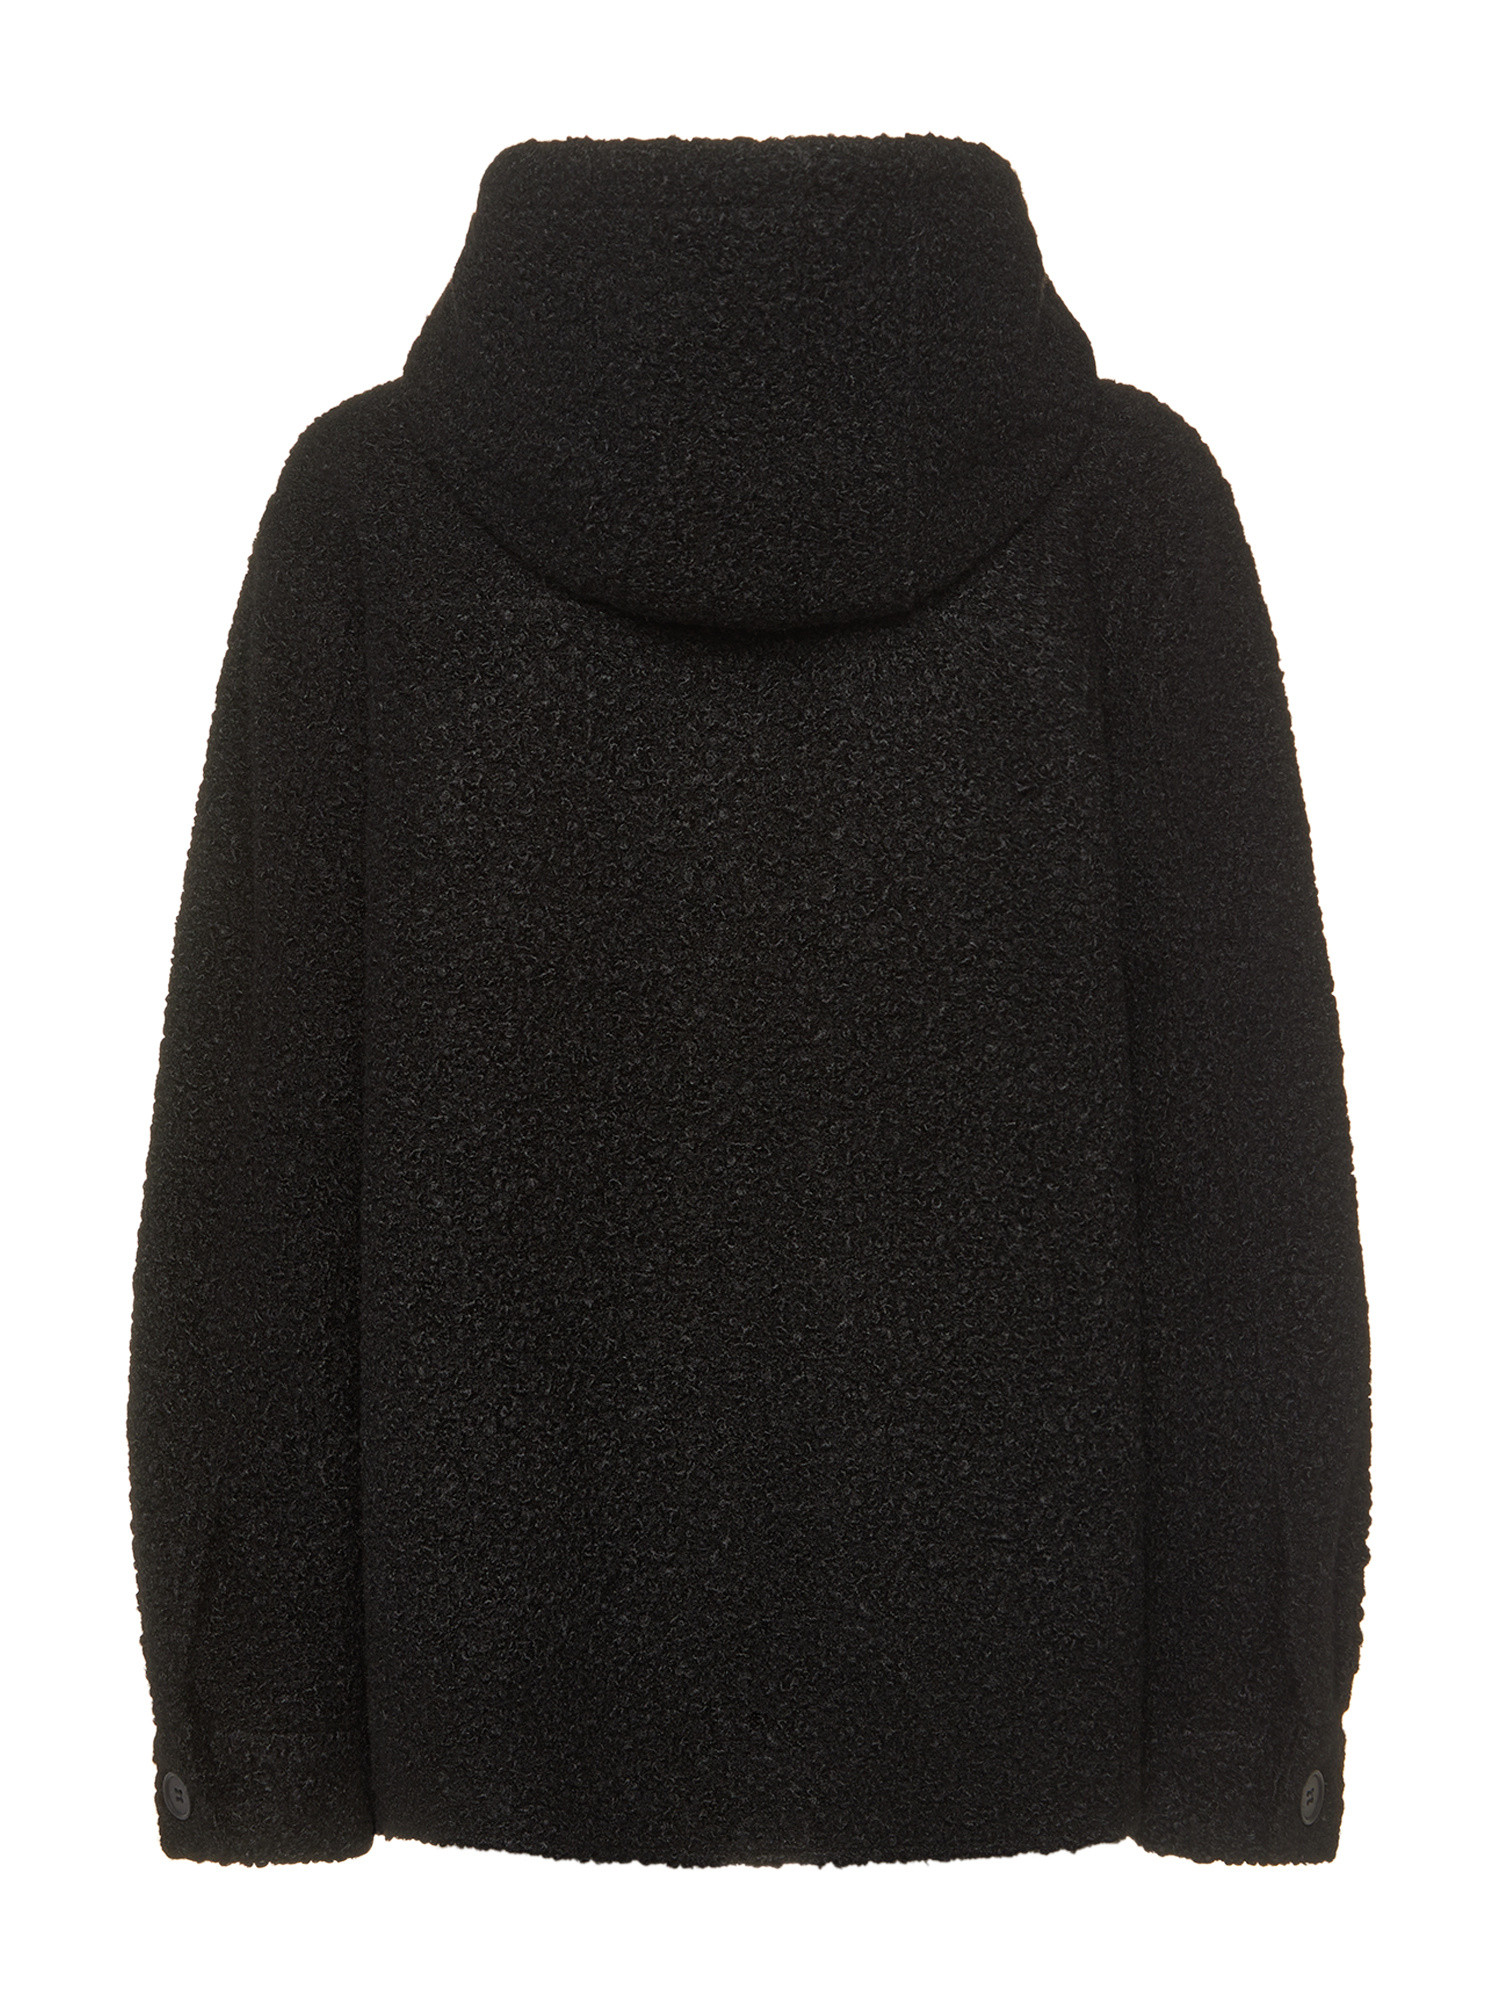 Koan - Short jacket with hood, Black, large image number 1